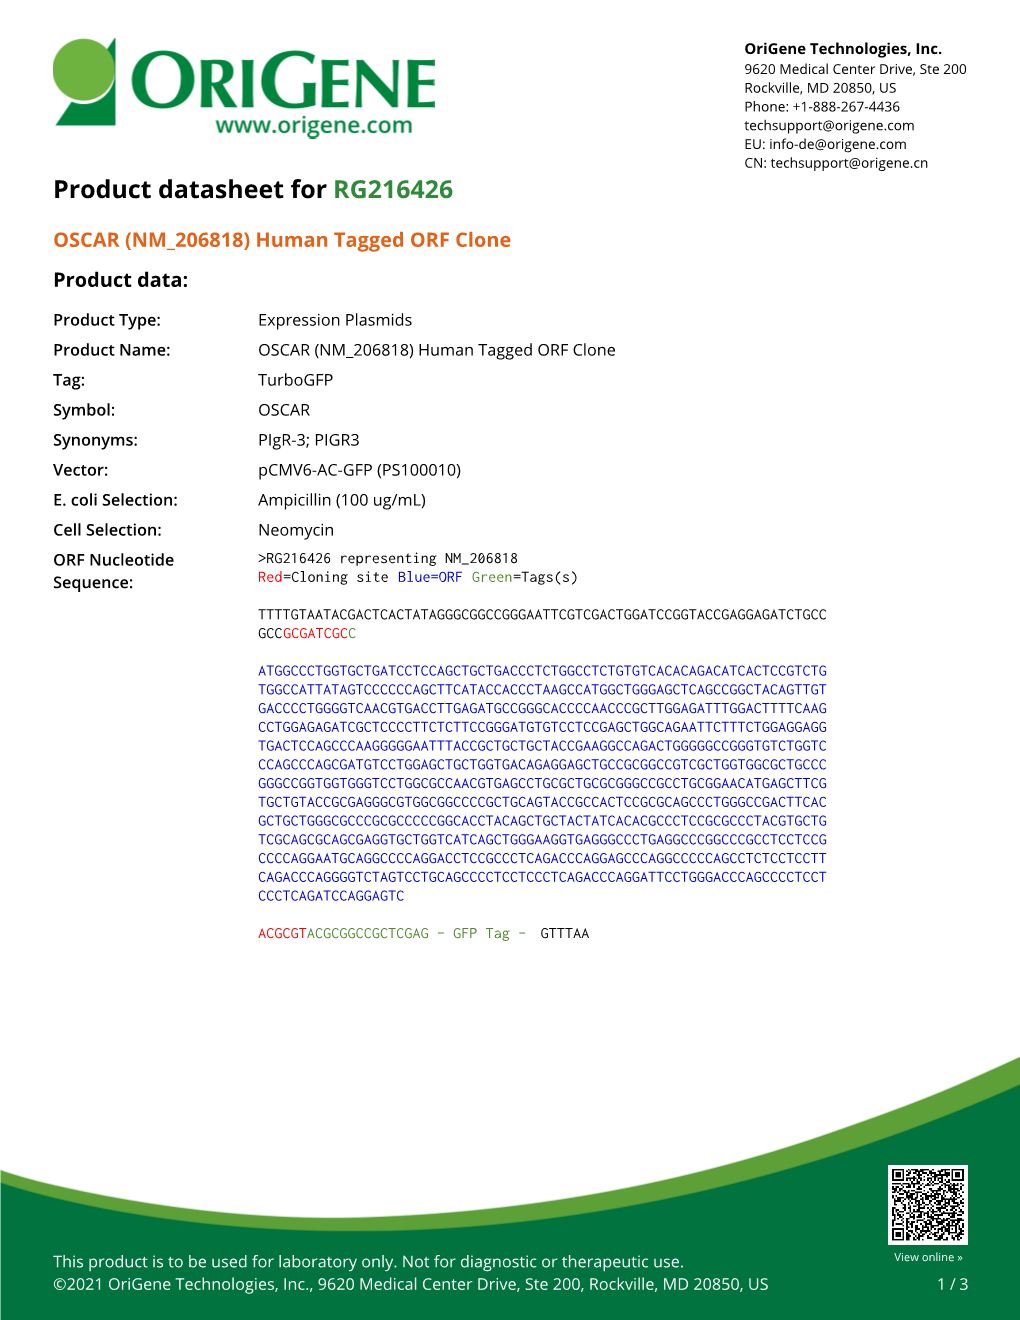 OSCAR (NM 206818) Human Tagged ORF Clone Product Data